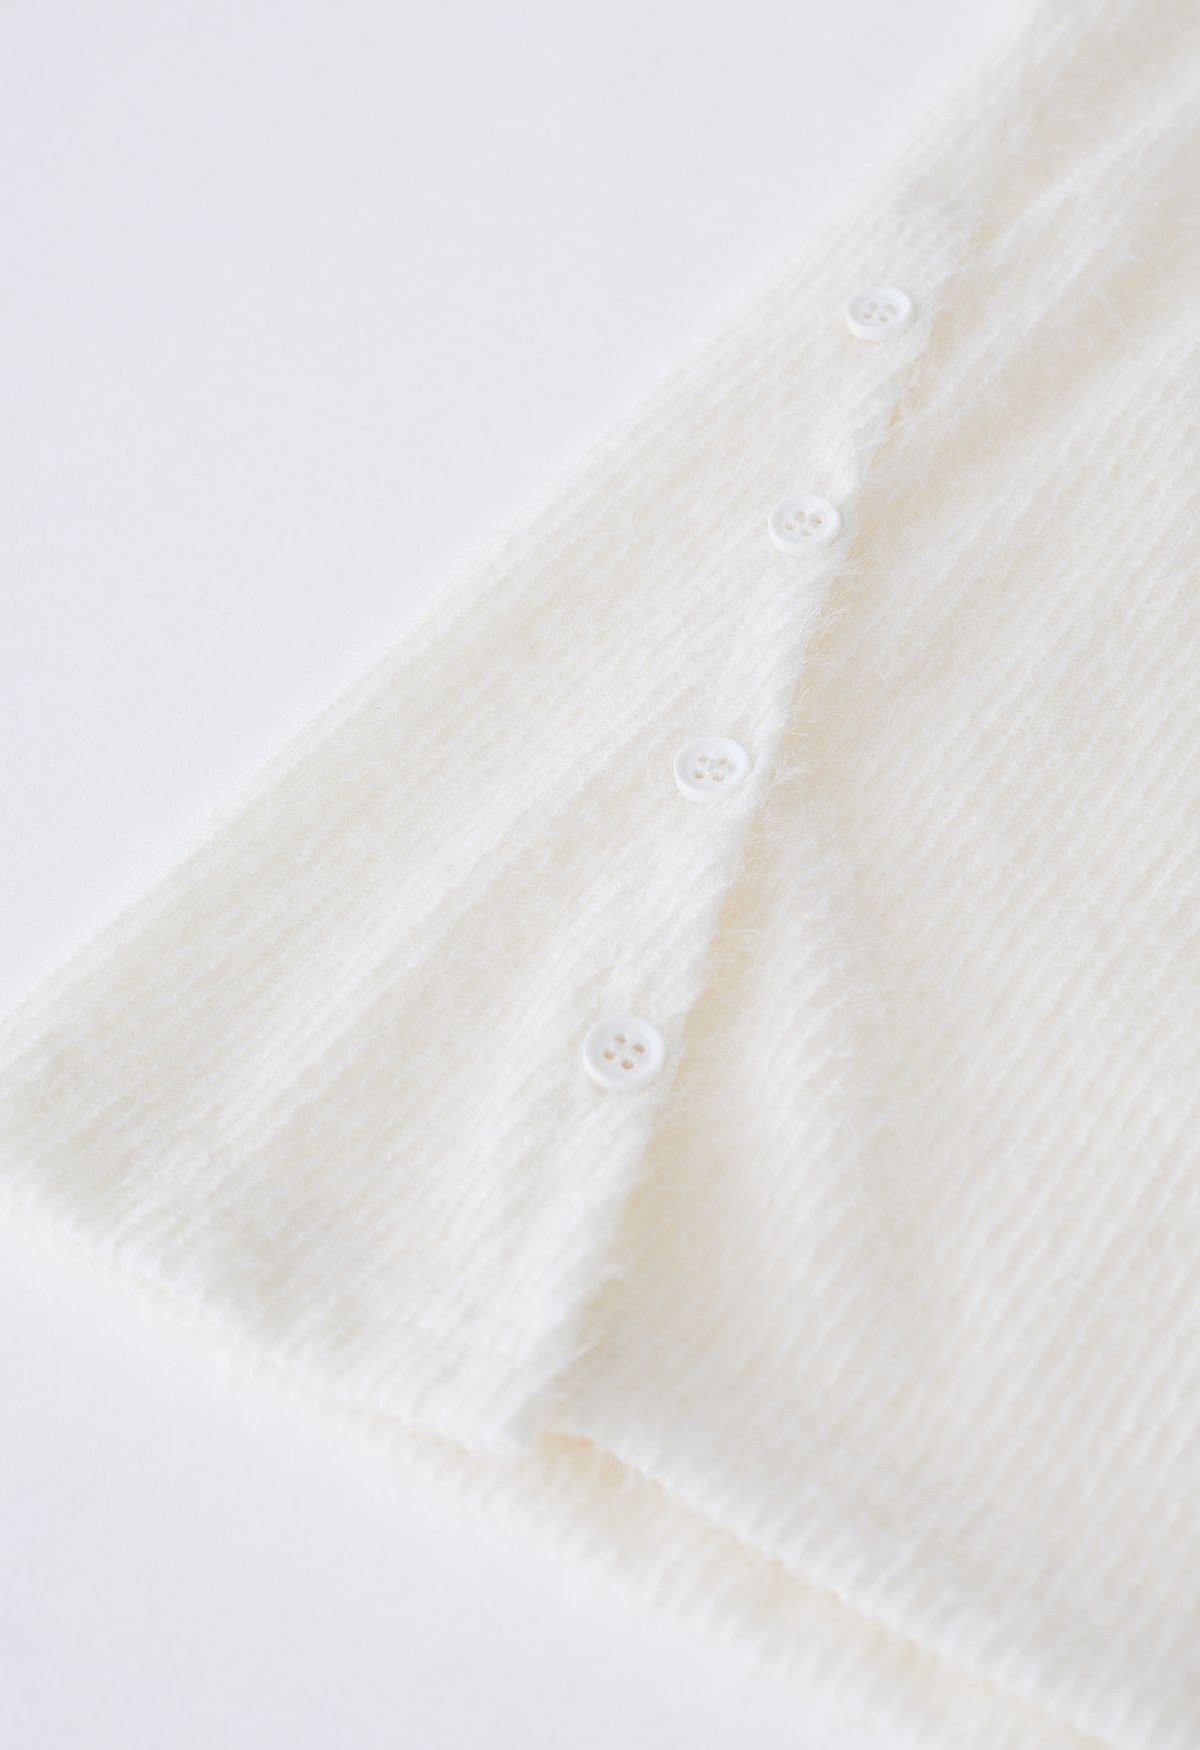 Fuzzy Mock Neck Knit Top in White